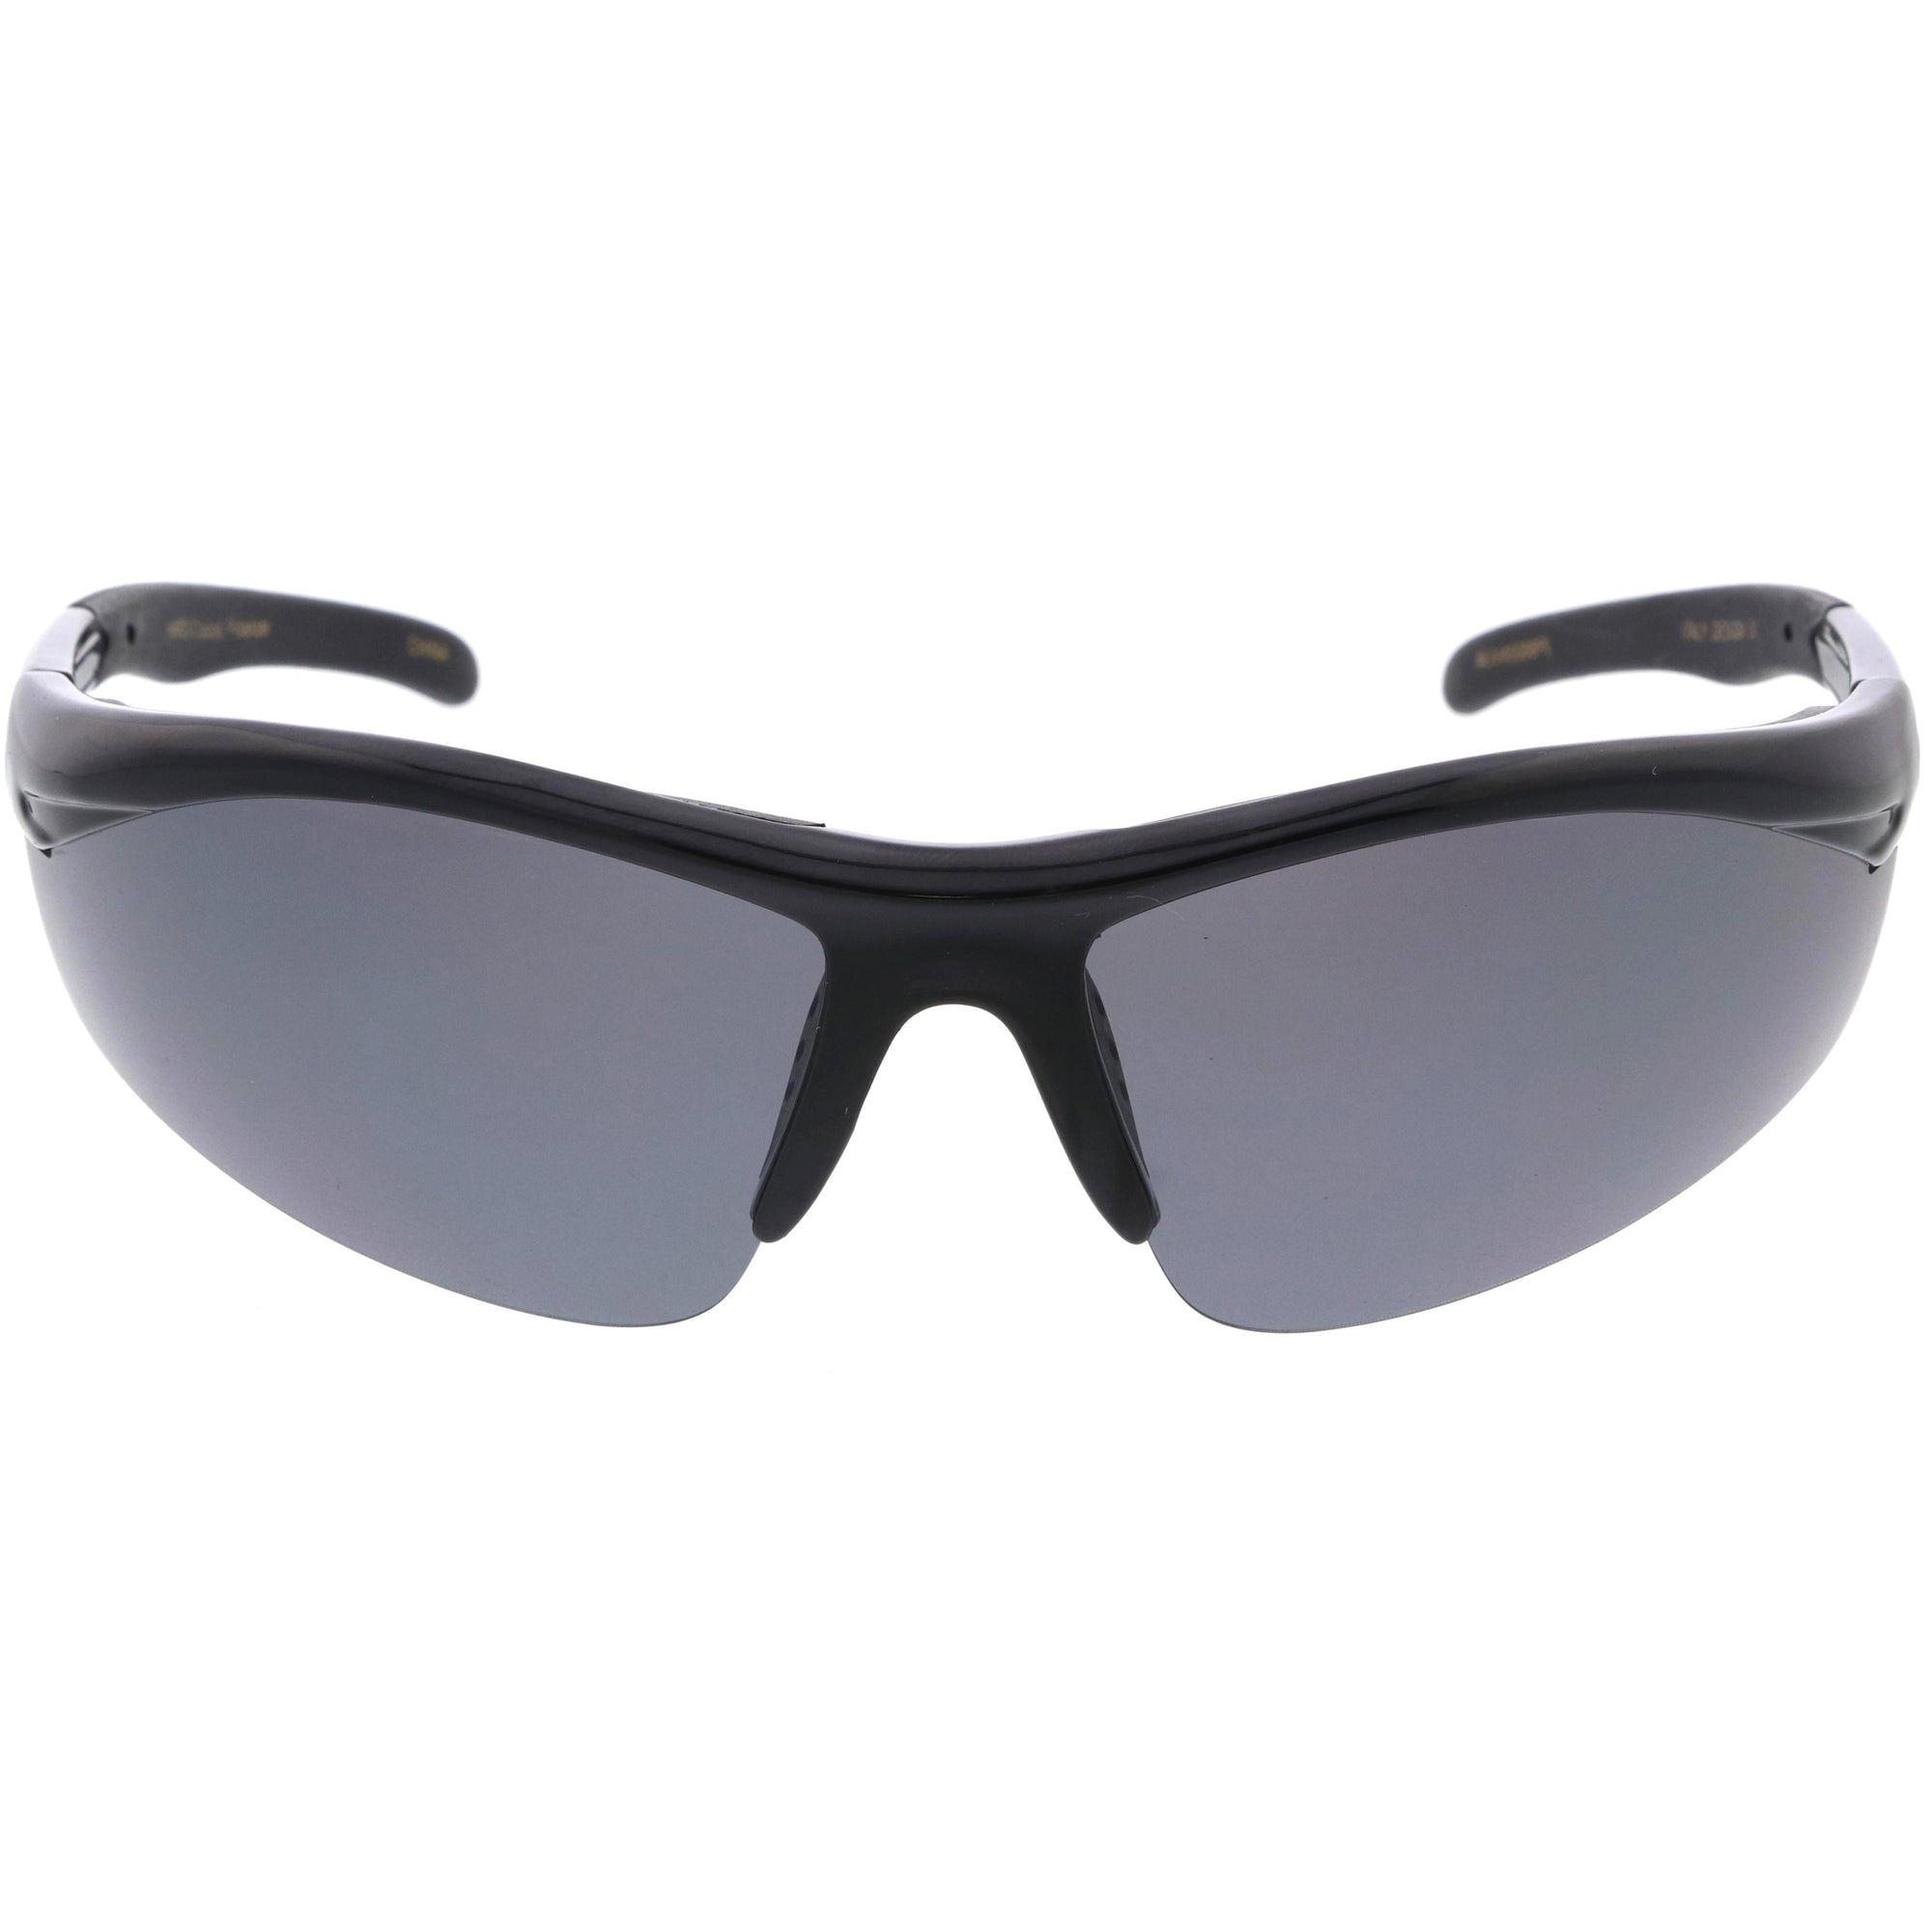 BONDDI Sunglasses Mens Polarised Sports Sunglasses for Men Women UV400  Protection Sun Glasses Driving Fishing Cycling Skiing Wrap Around  Lightweight